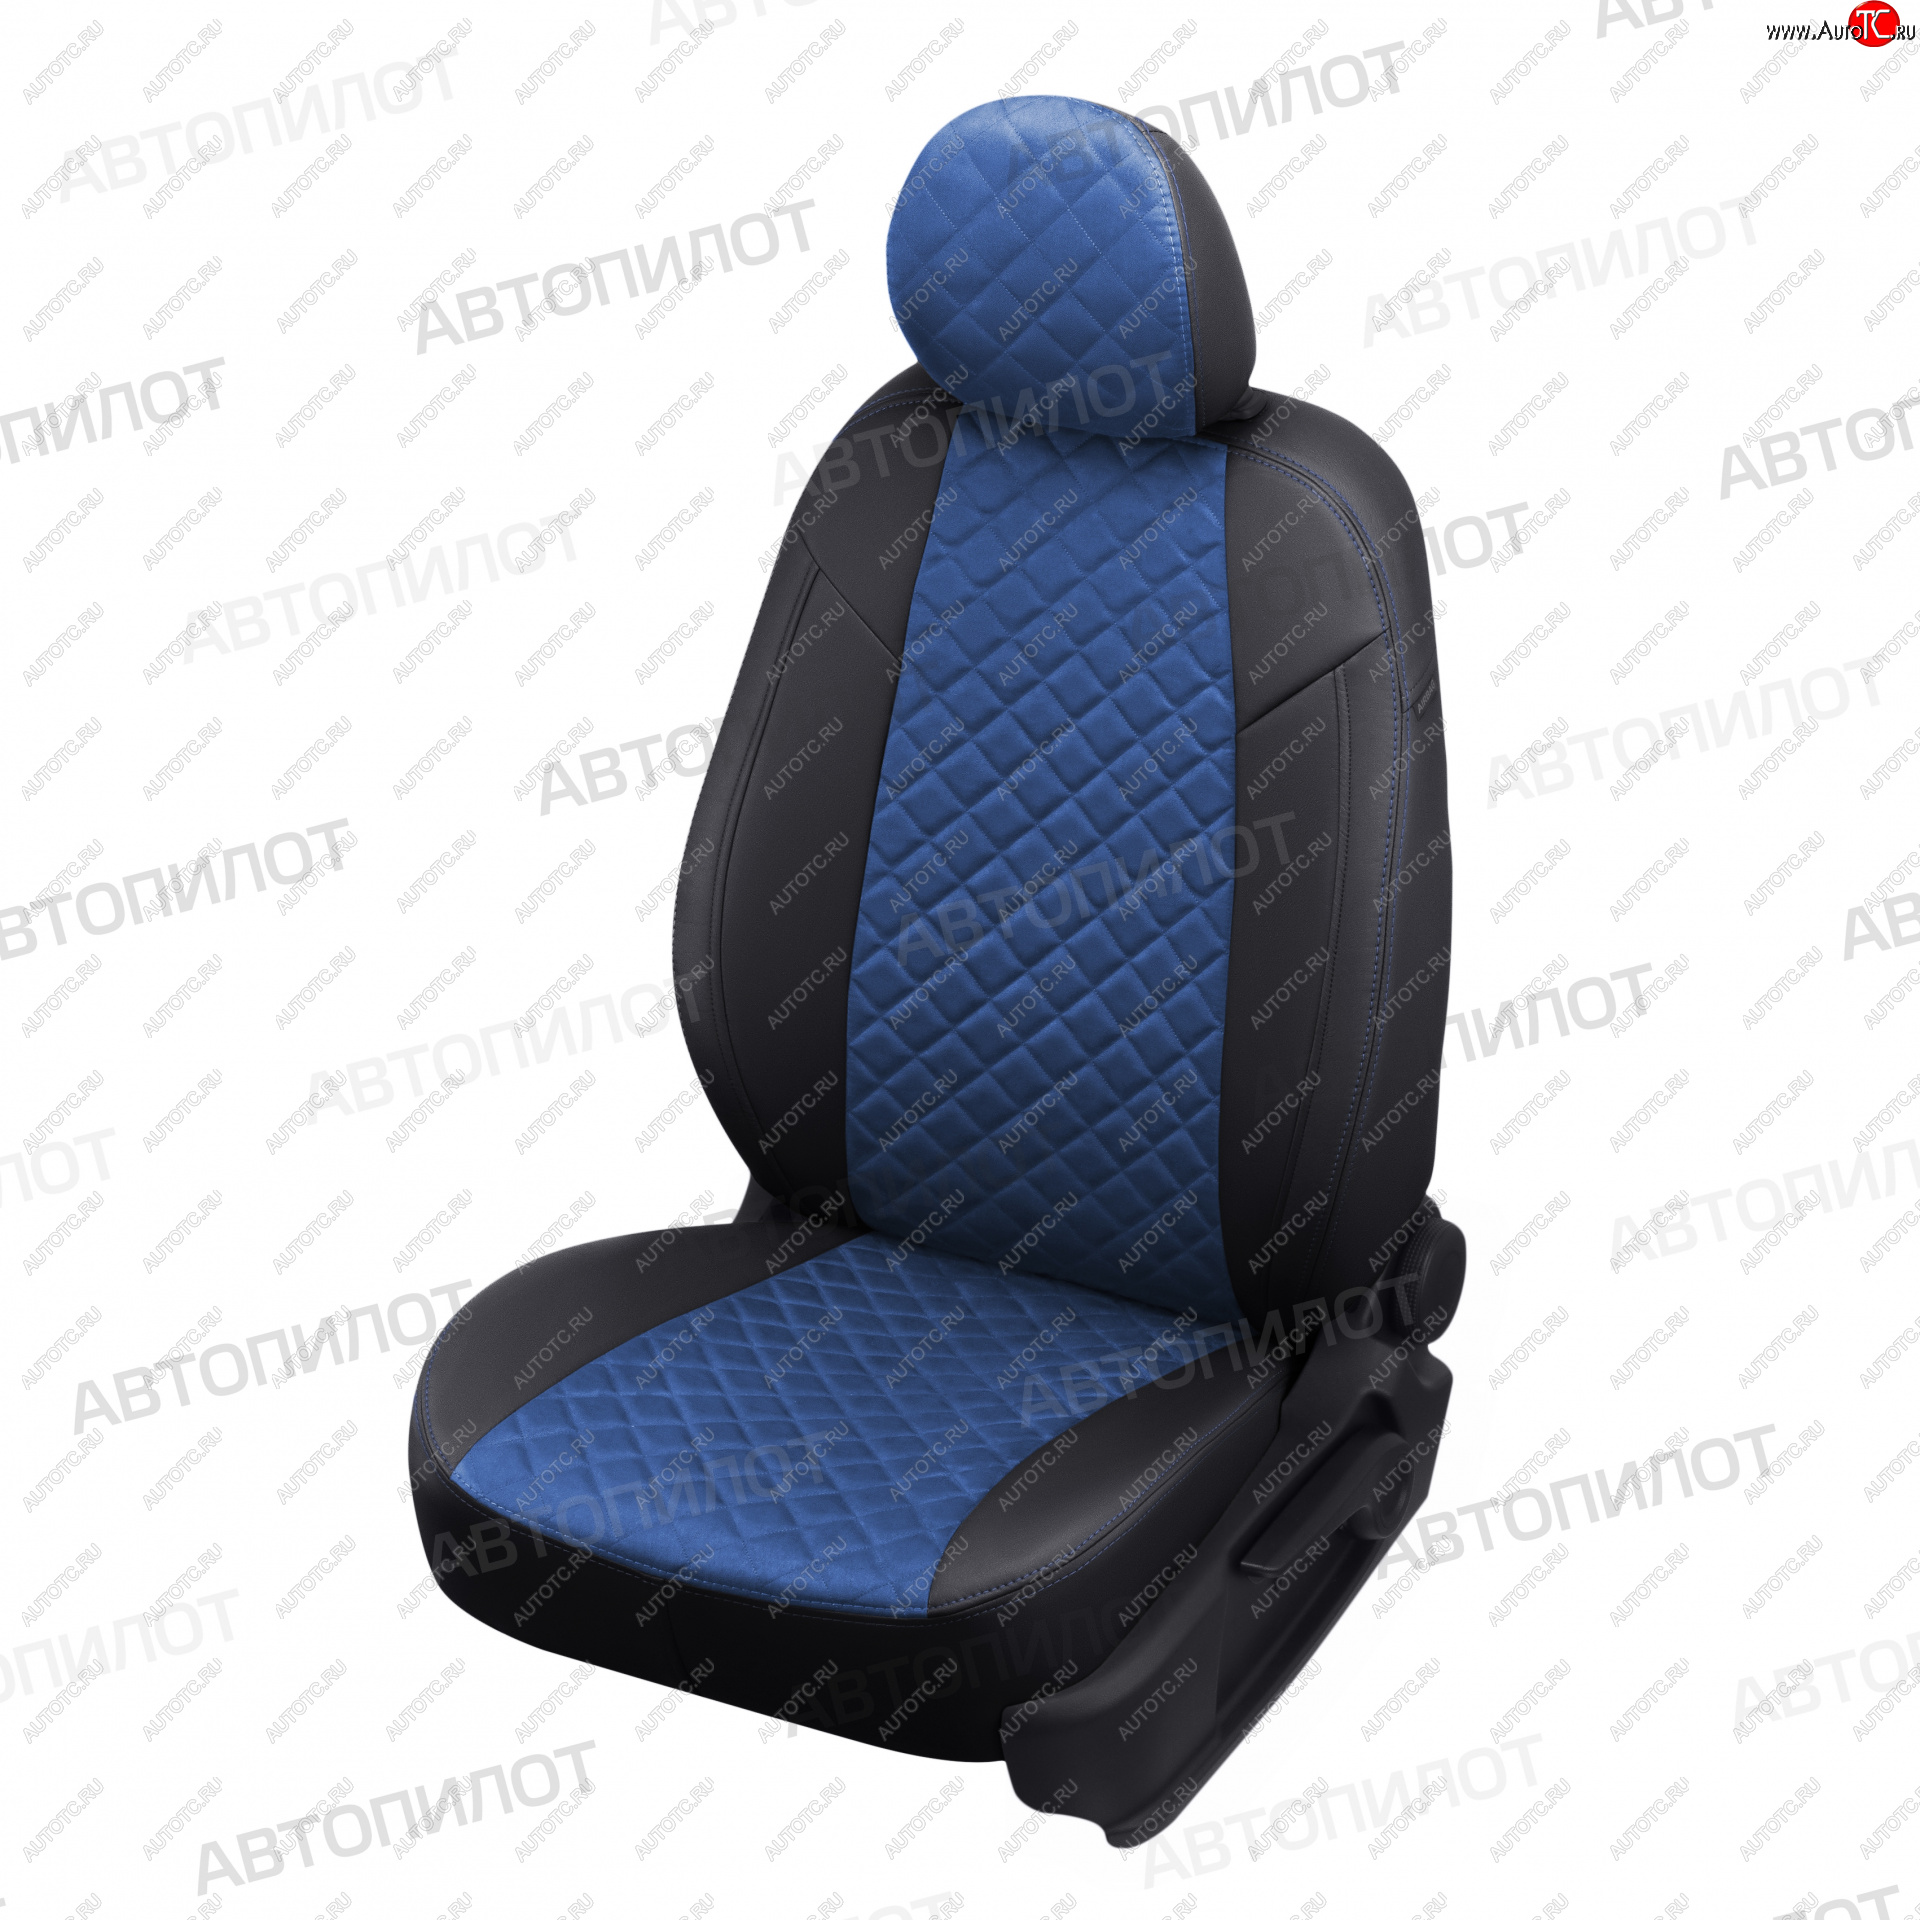 14 499 р. Чехлы сидений (5 мест, экокожа) Автопилот Ромб  Ford Galaxy  WGR (1995-2006) (черный/синий)